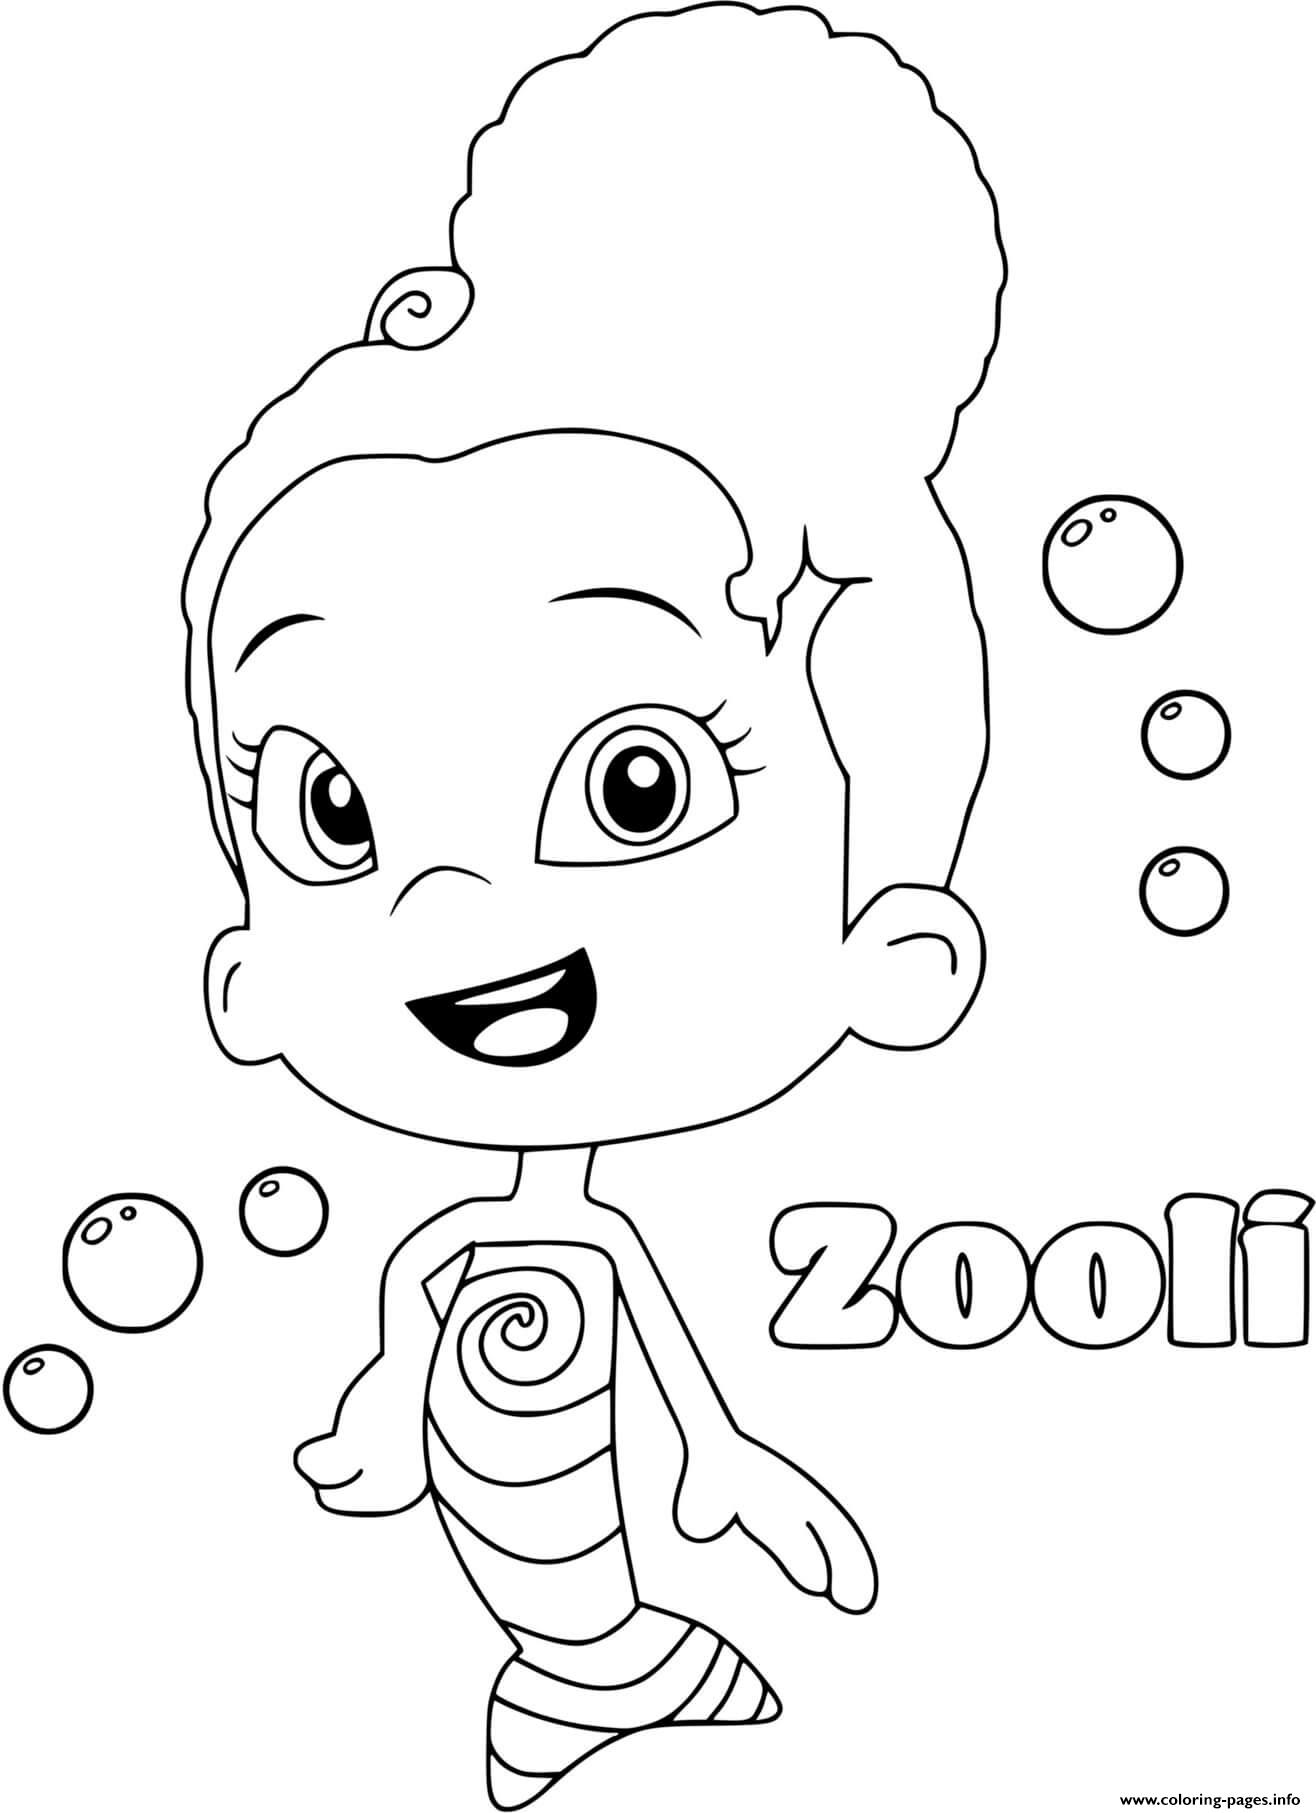 Zooli Bubble Guppies coloring